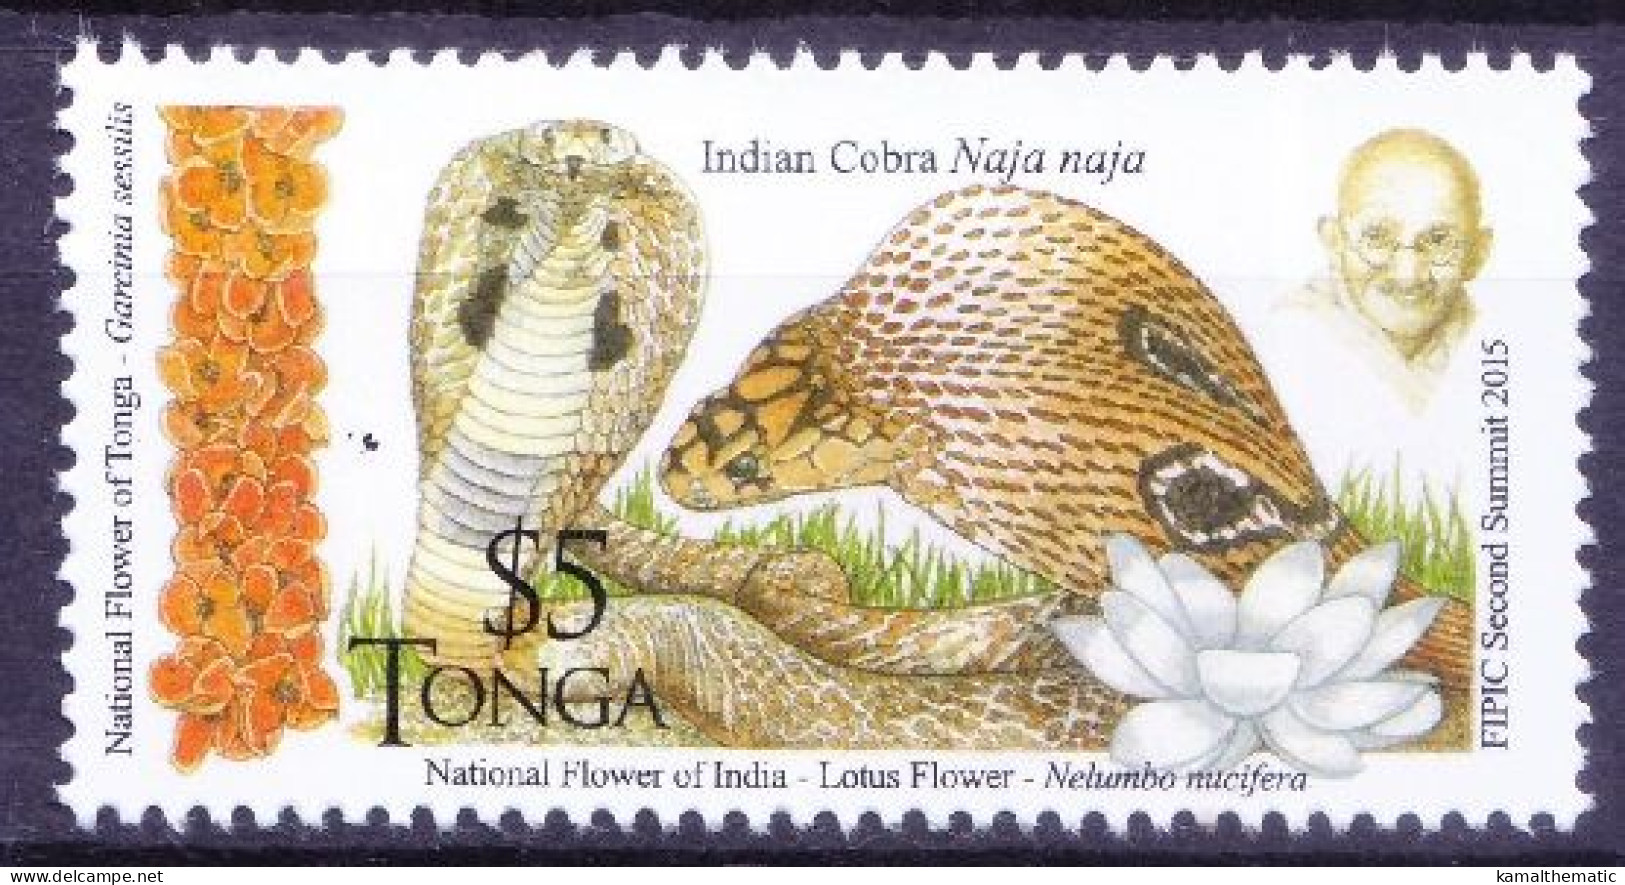 Tonga 2015 MNH, Gandhi, Indian Cobra, Reptiles, Lotus Flower - Serpents